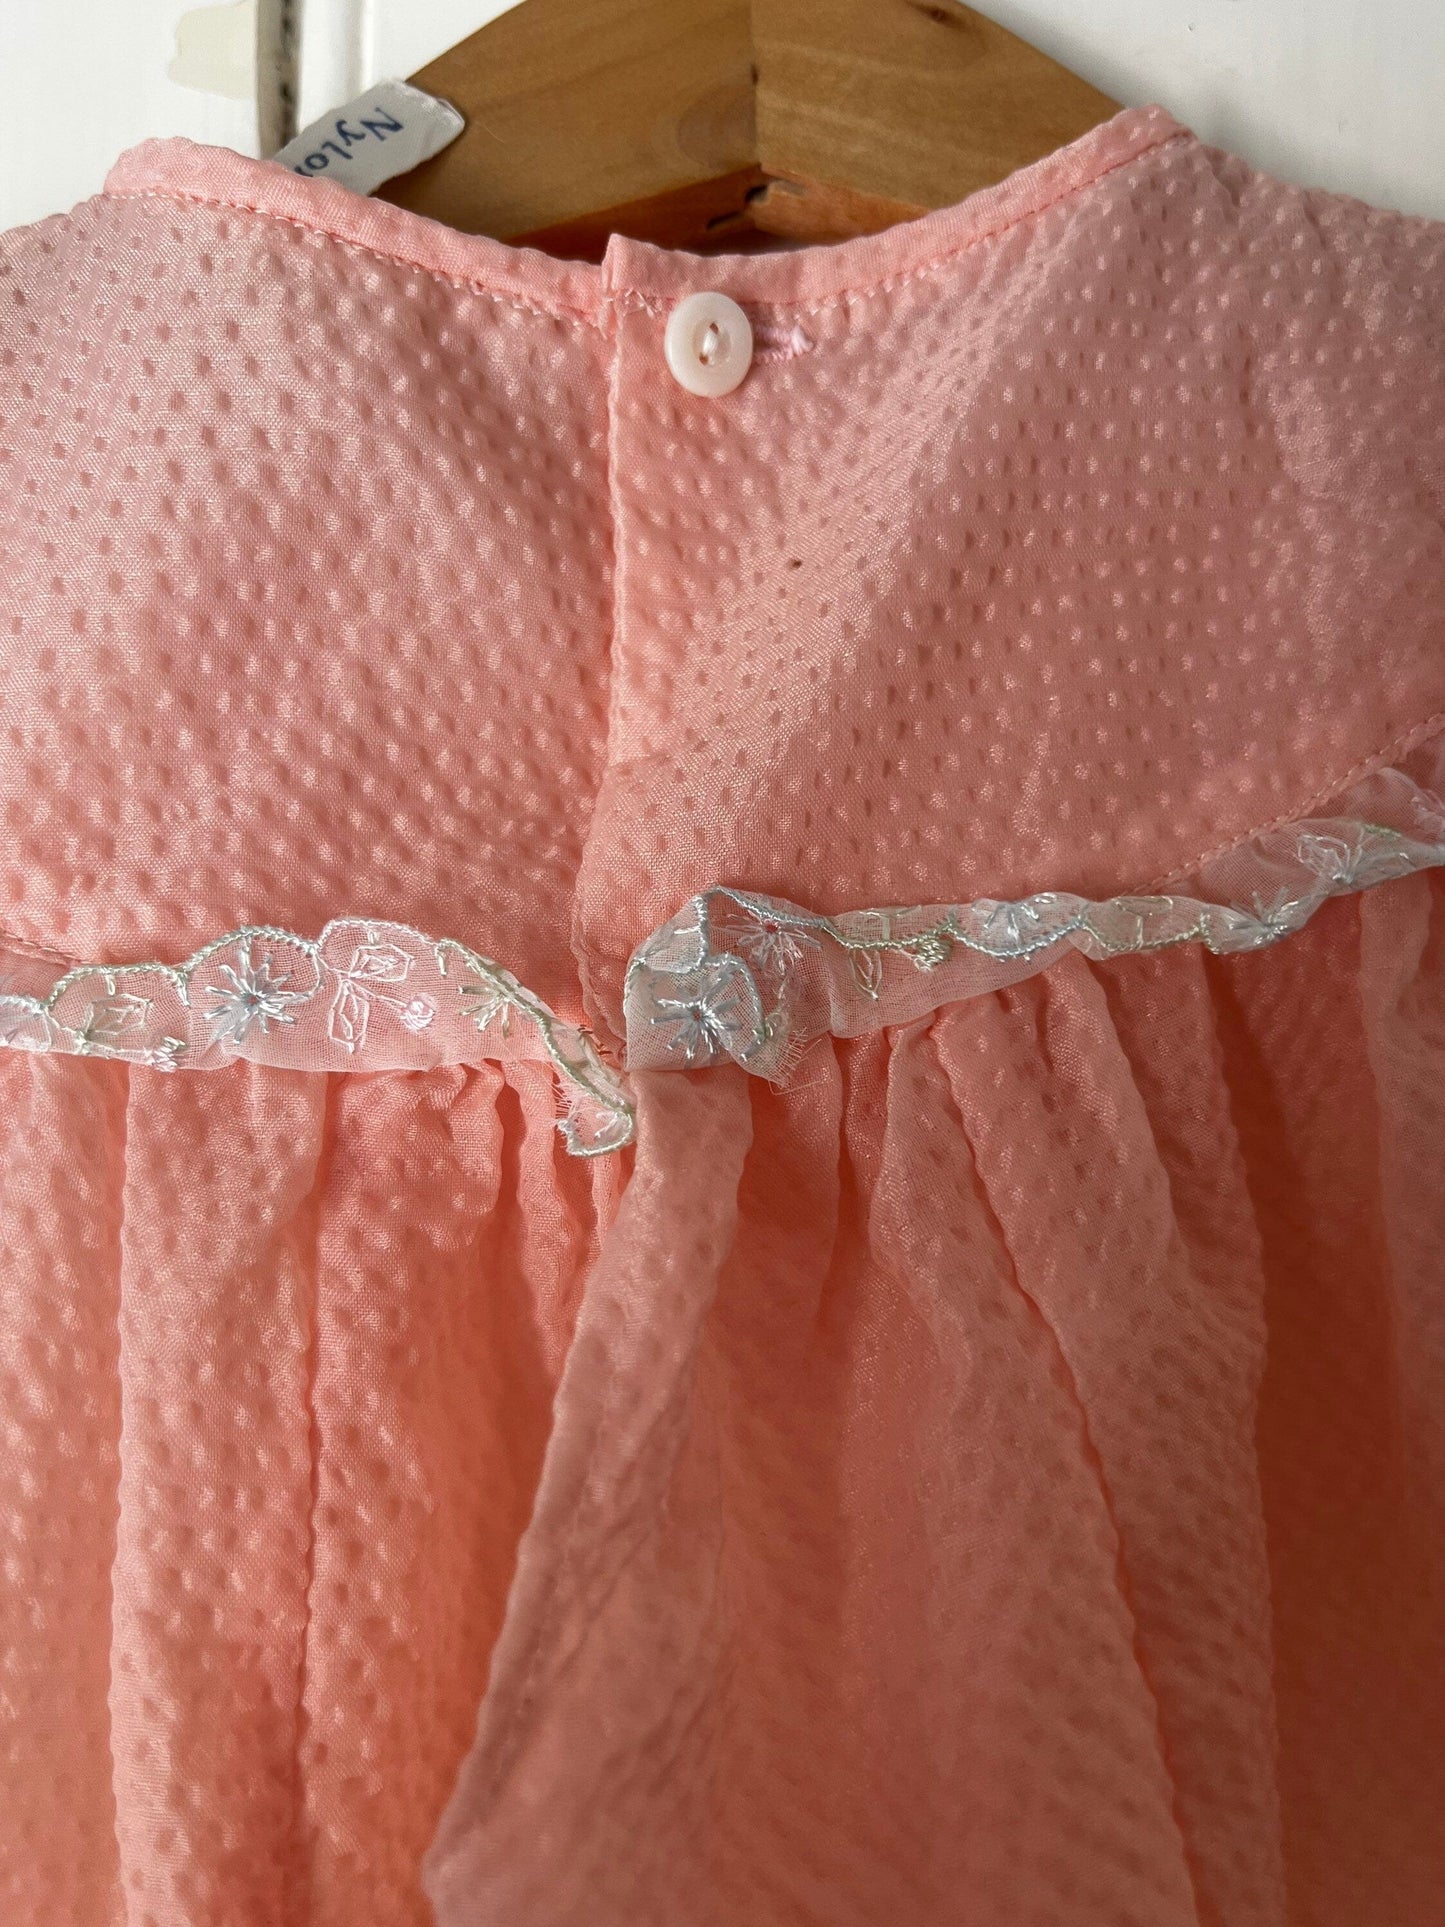 Vintage Girls Dress - pink nylon seersucker Dress Baby Dress age 2-3 years